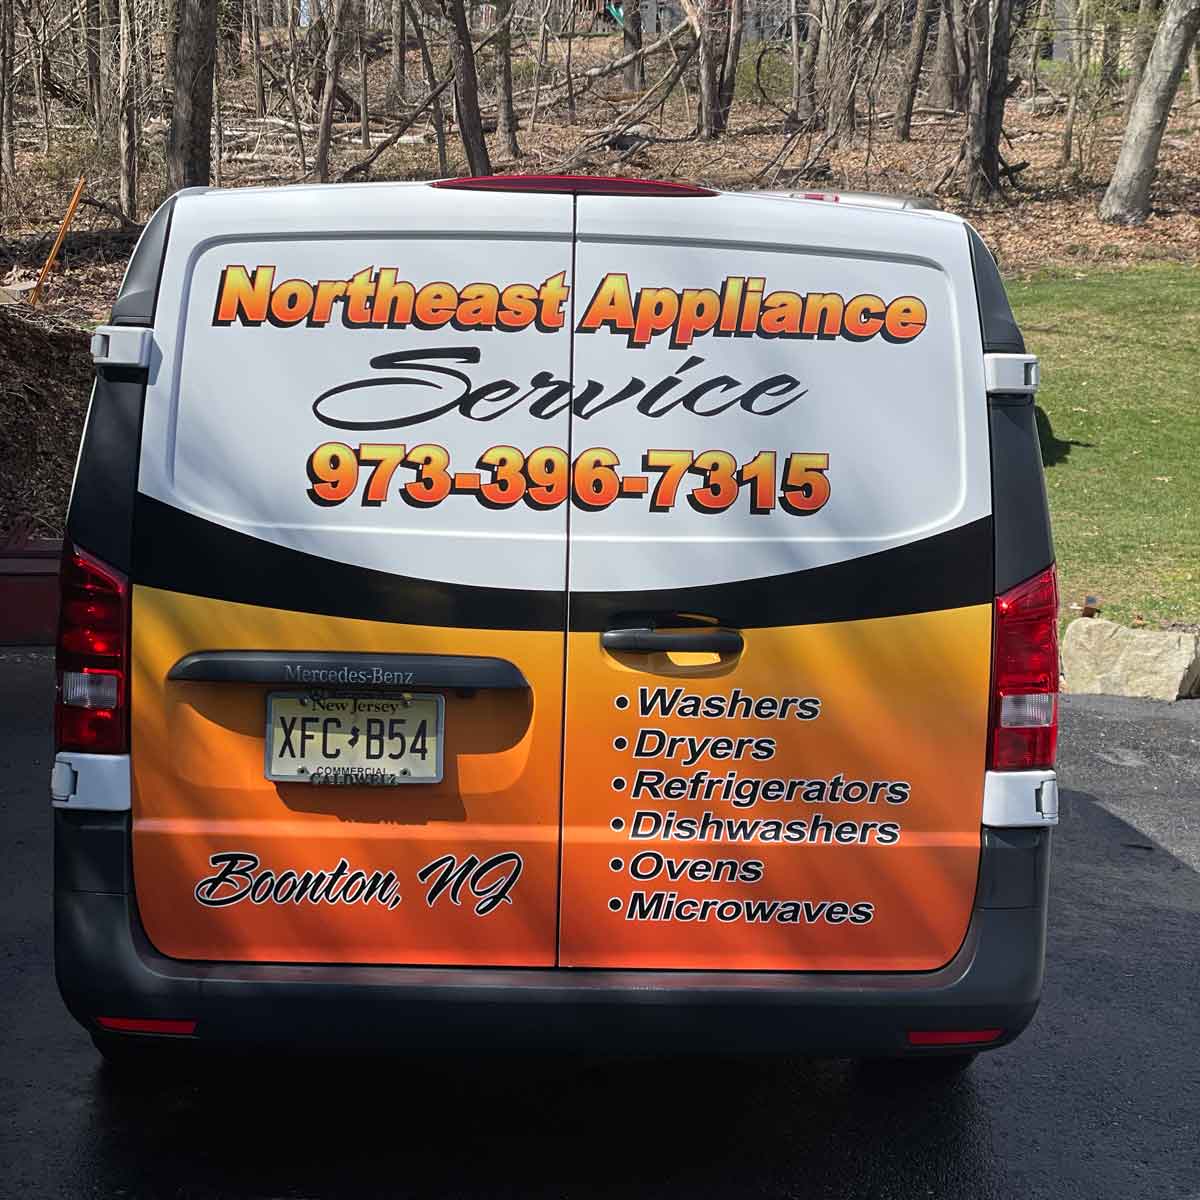 Northeast Appliance Service, LLC van